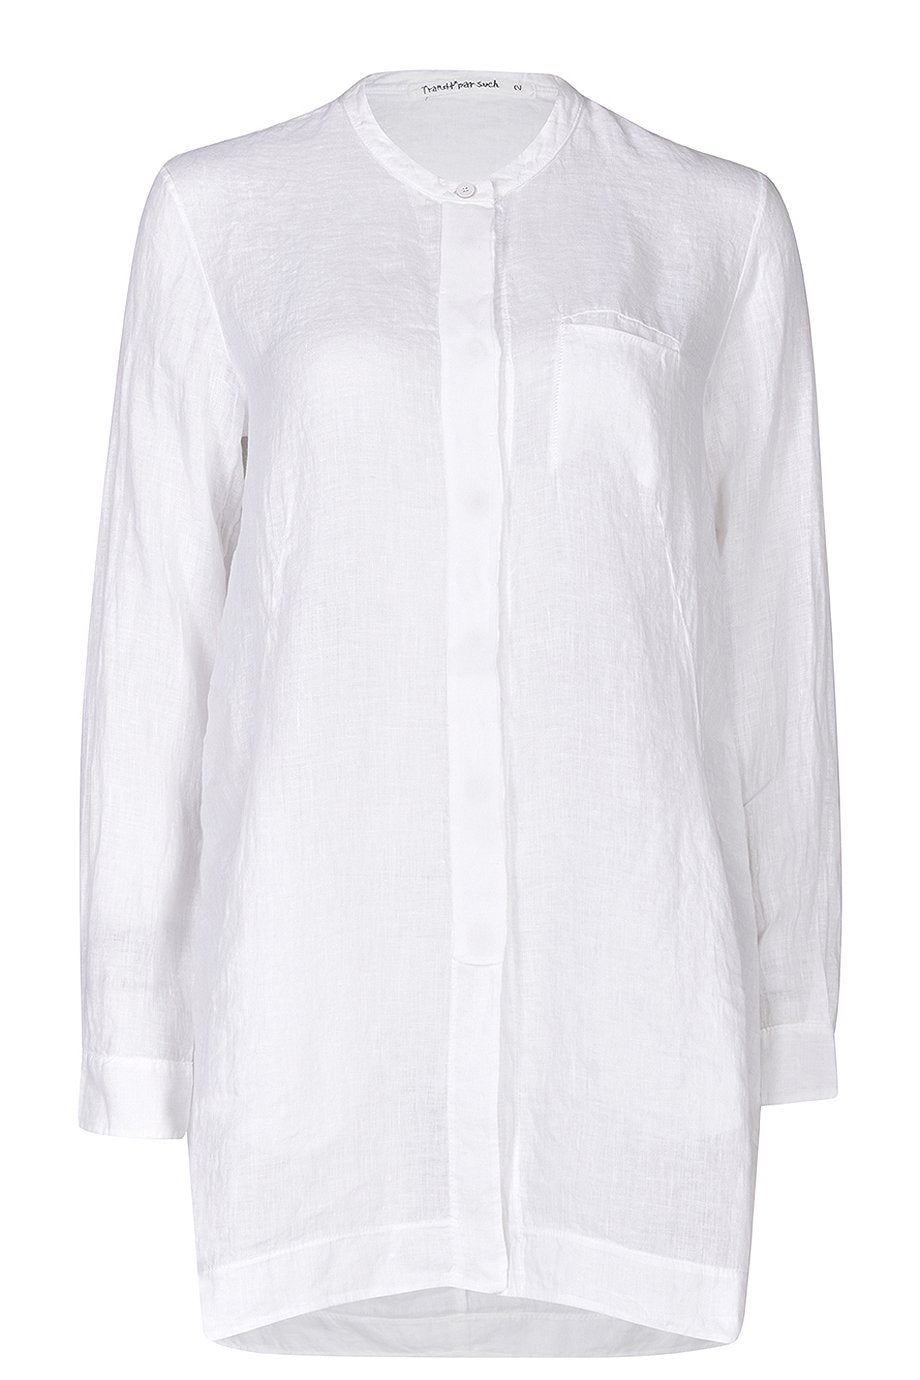 Transit Button Shirt - White